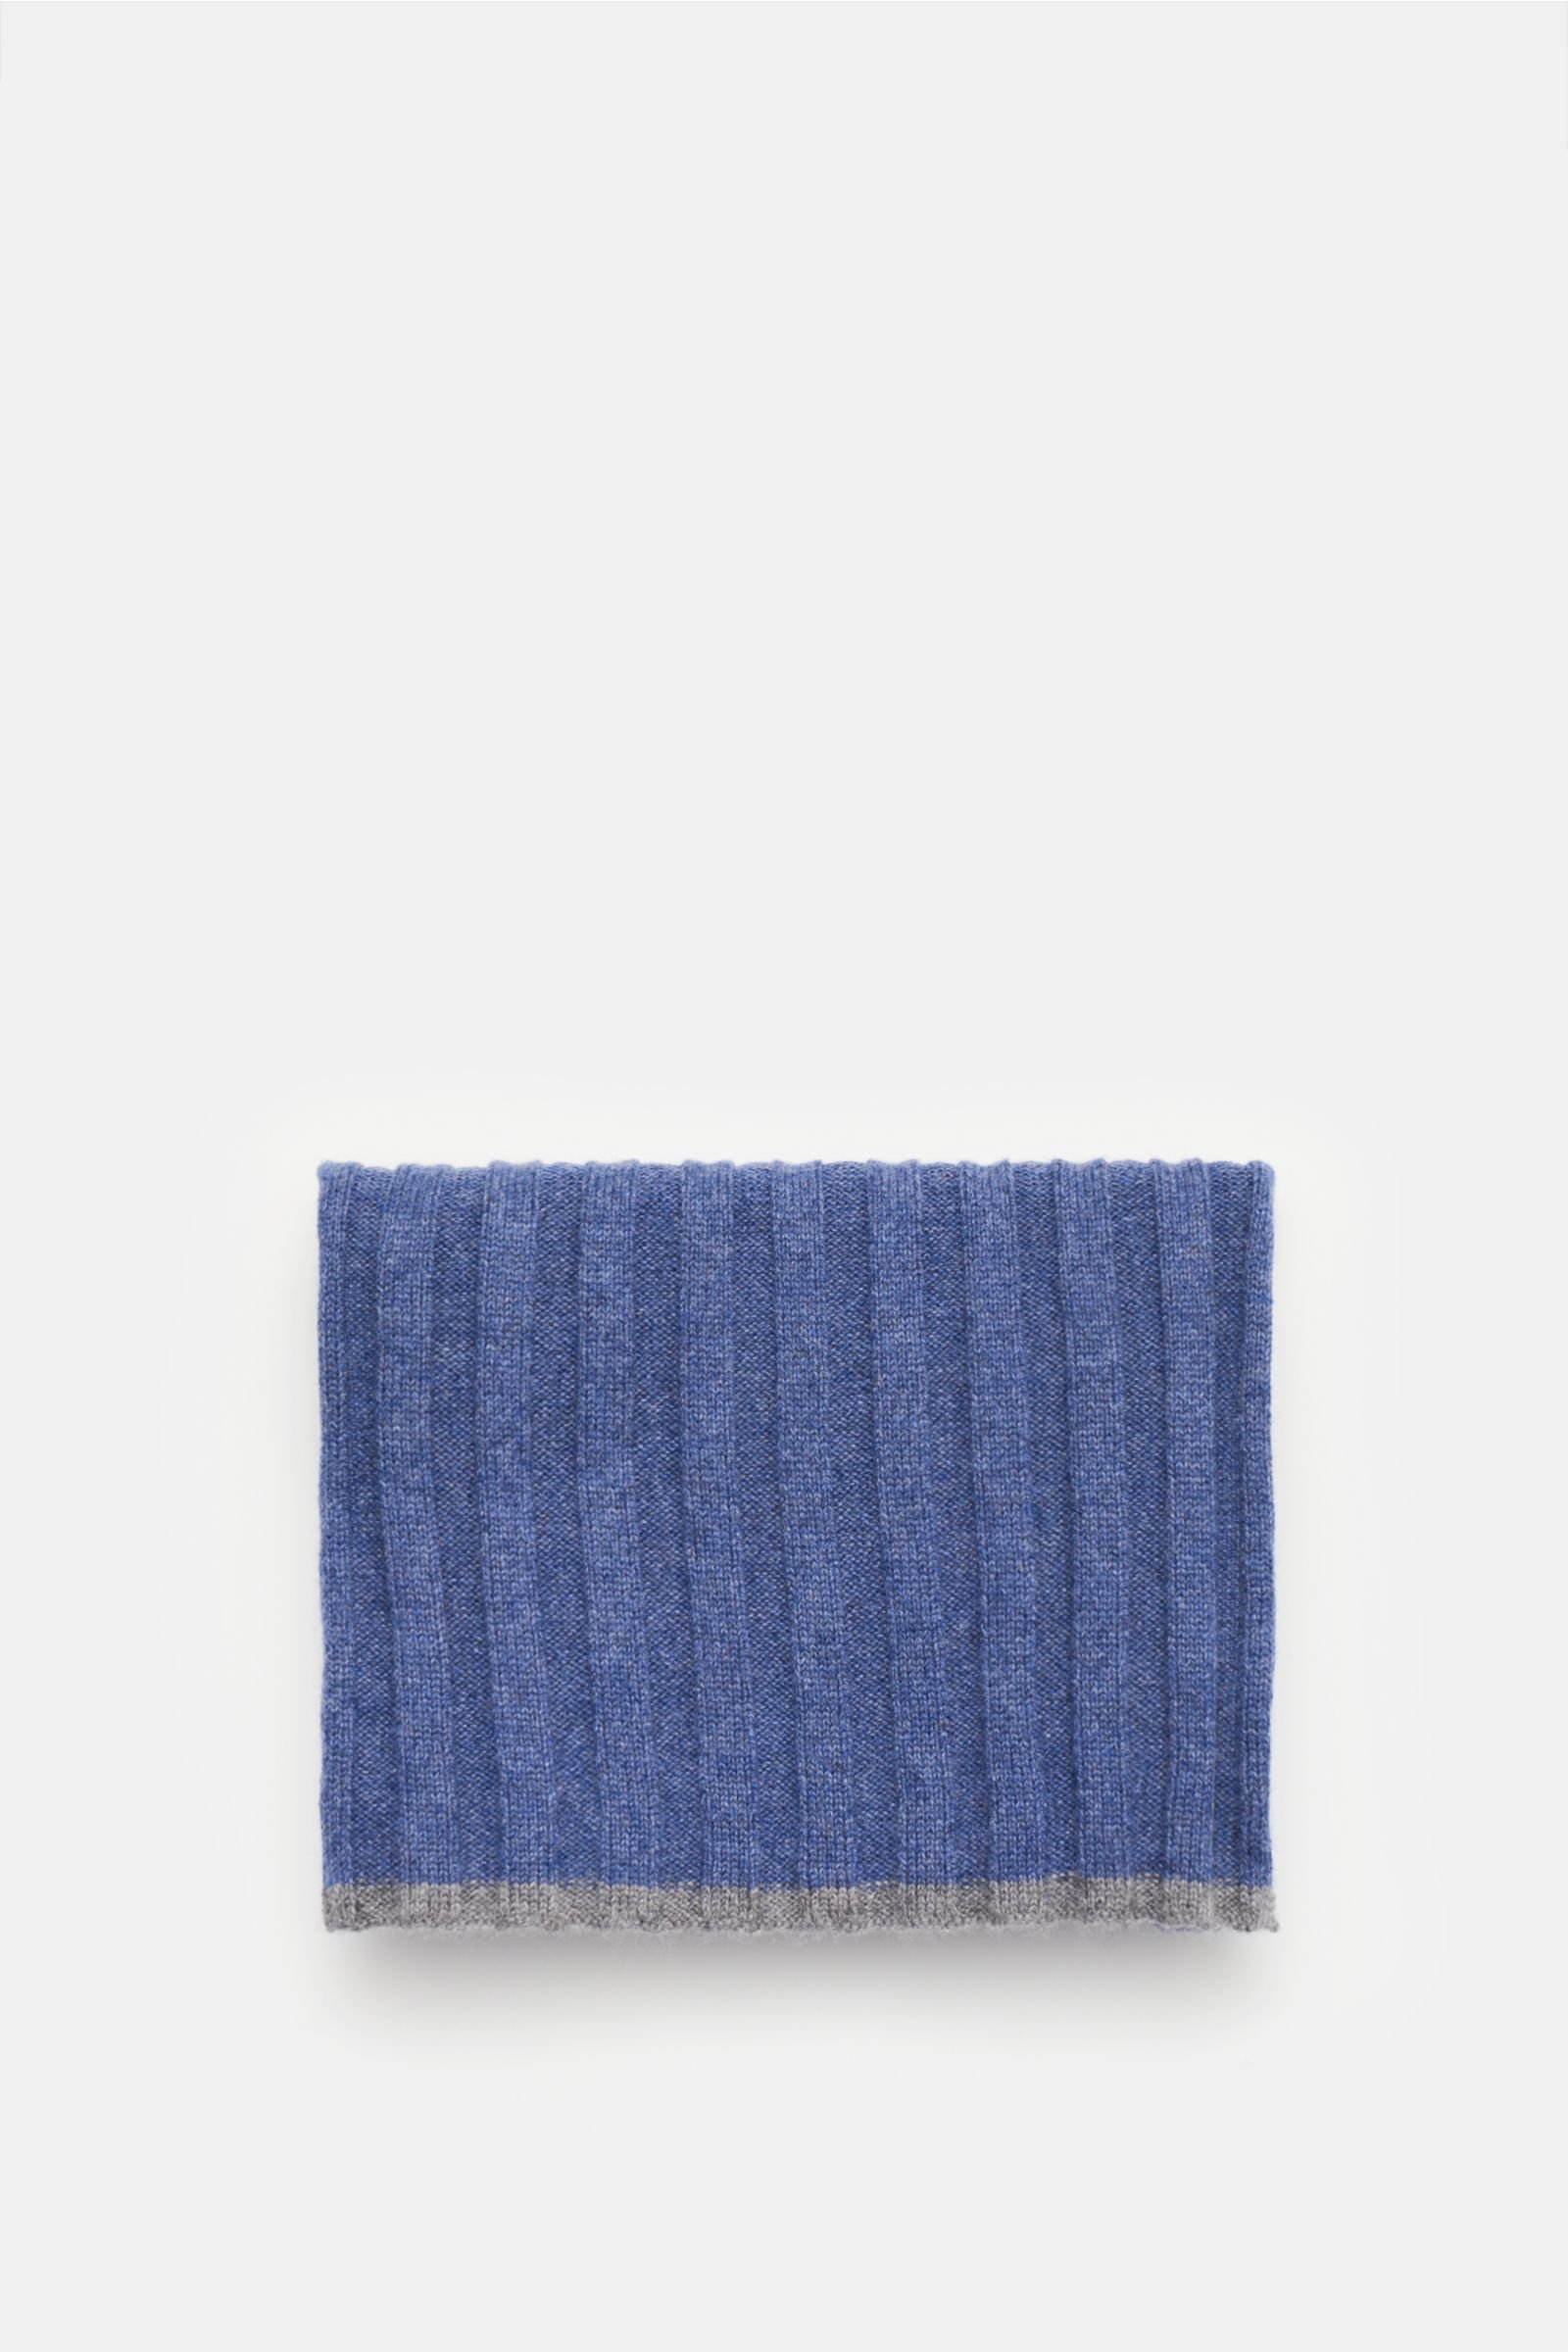 Cashmere scarf grey-blue